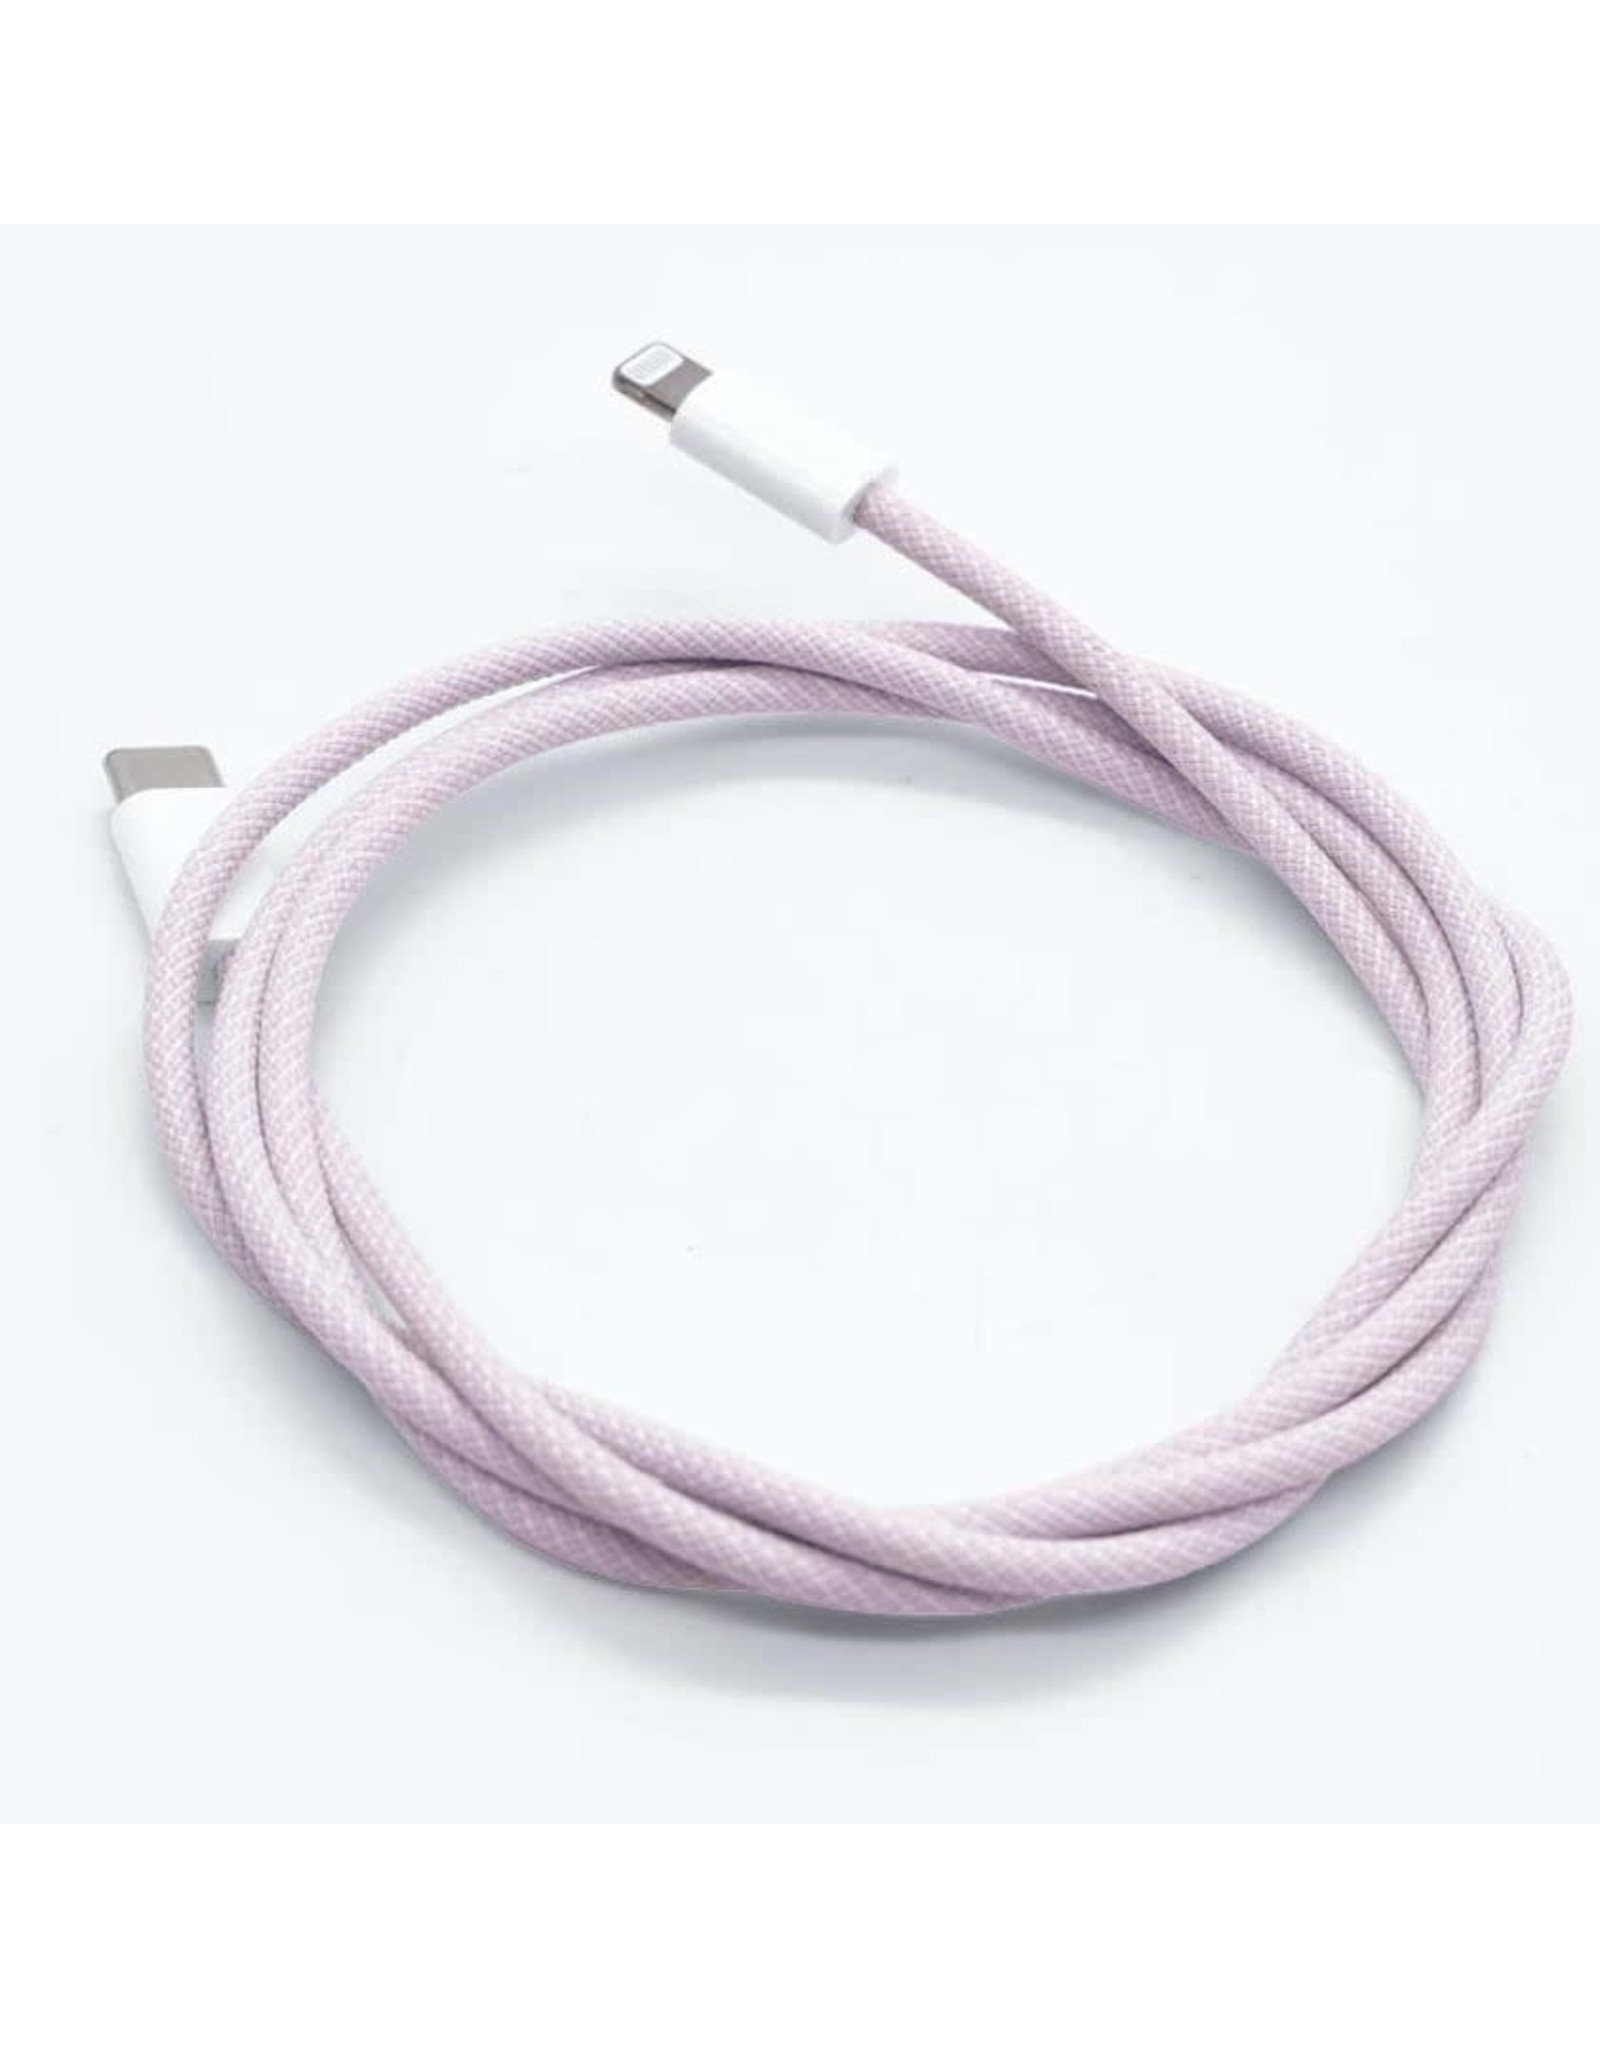 Apple Apple USB-C to Lightning Cable, 1m,